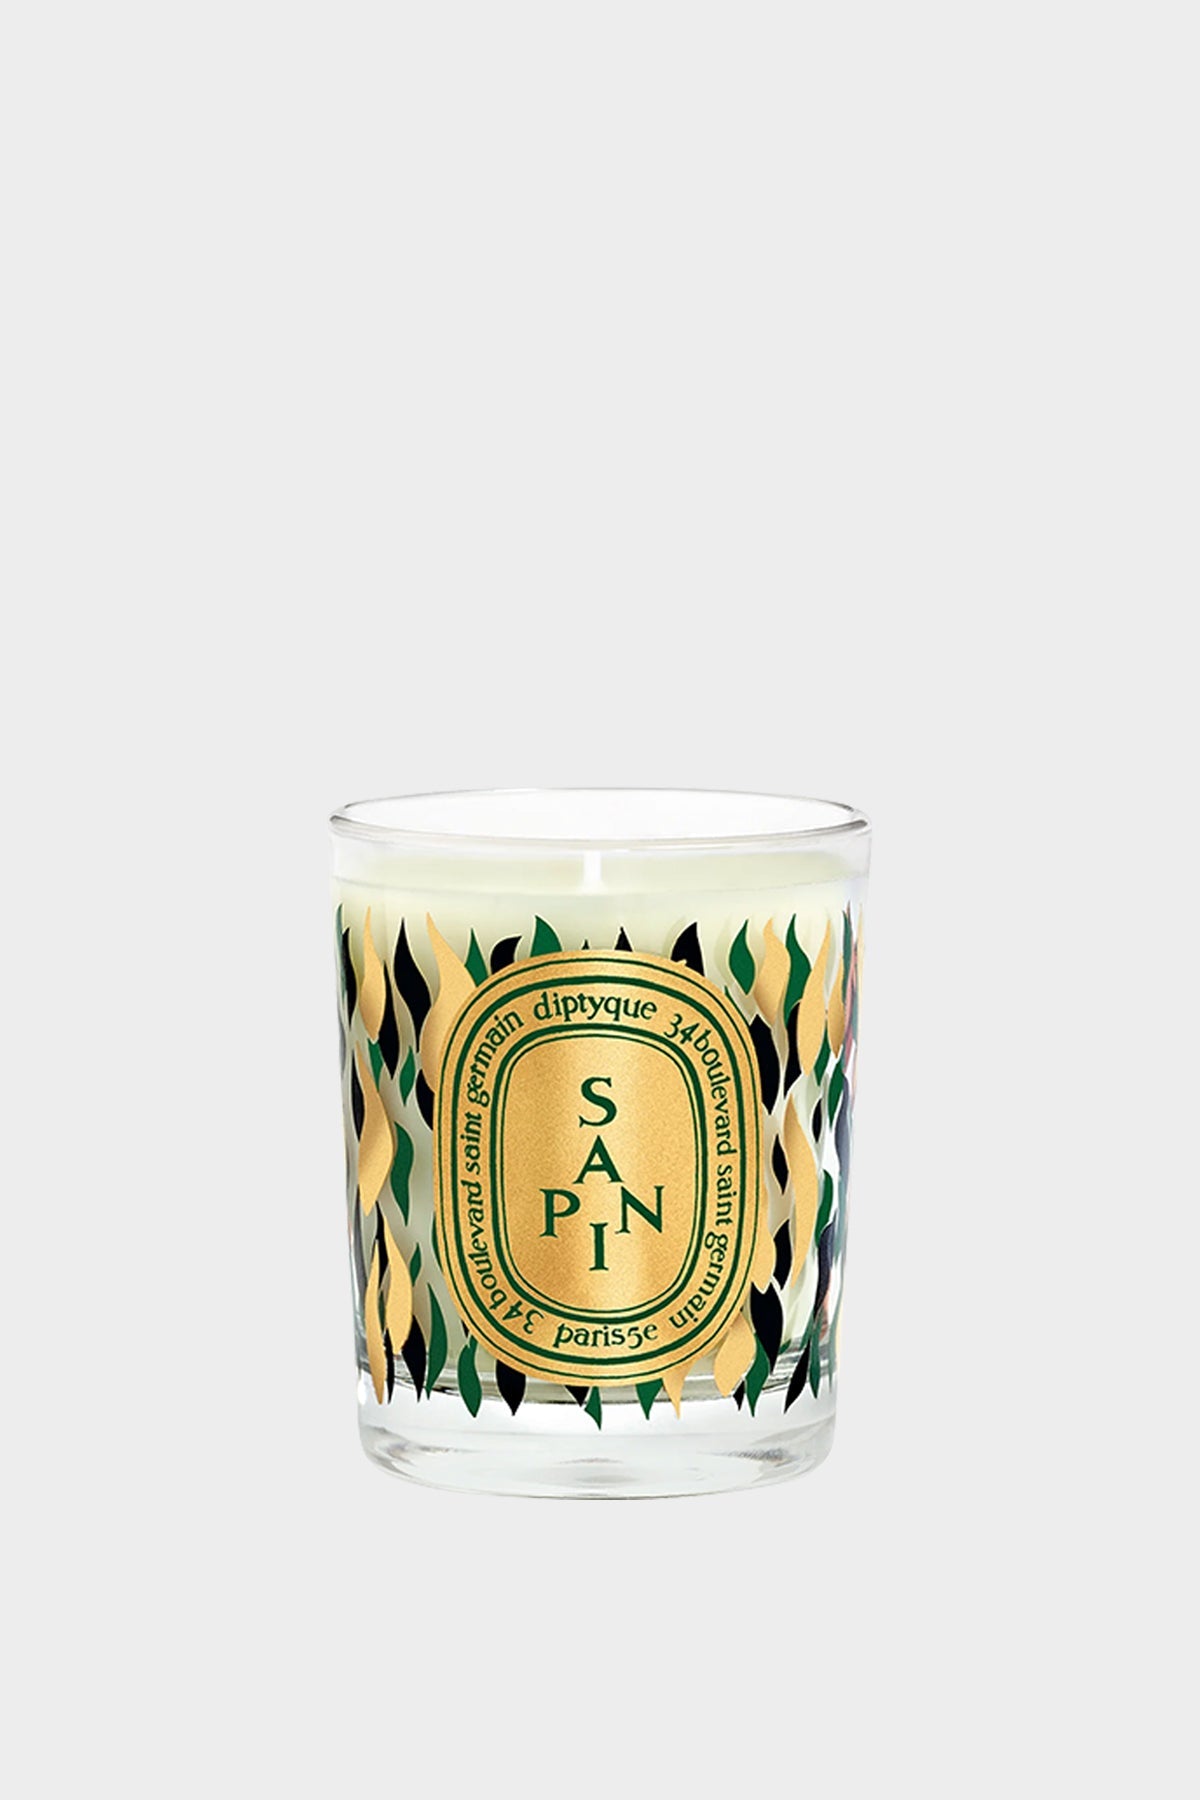 Sapin (Pine Tree) Mini Candle 70g - Holiday Edition 2023 - shop-olivia.com